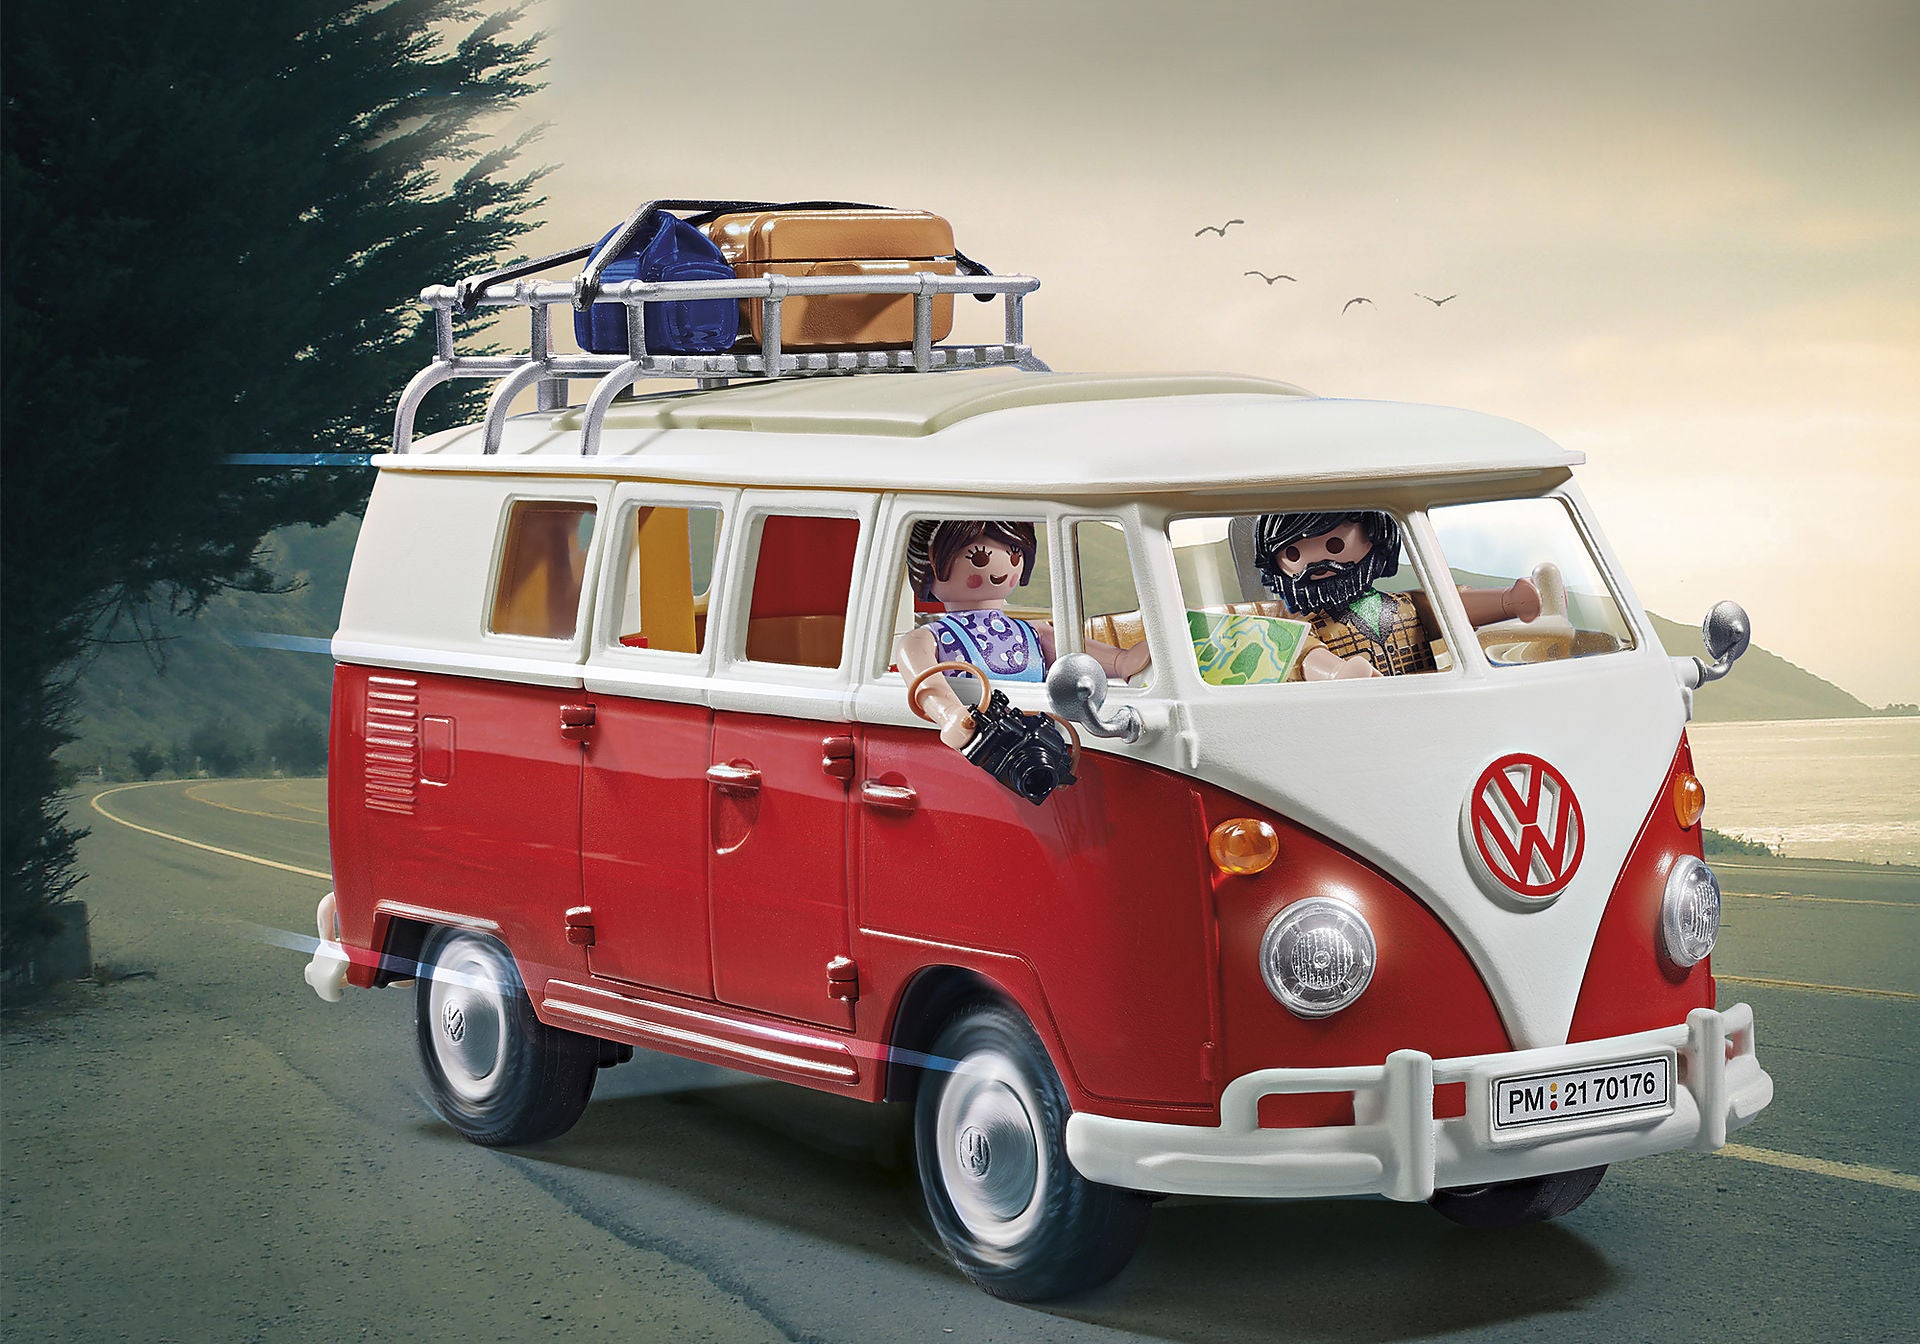 Playmobil Vehicles: Volkswagen Camping Bus 70176